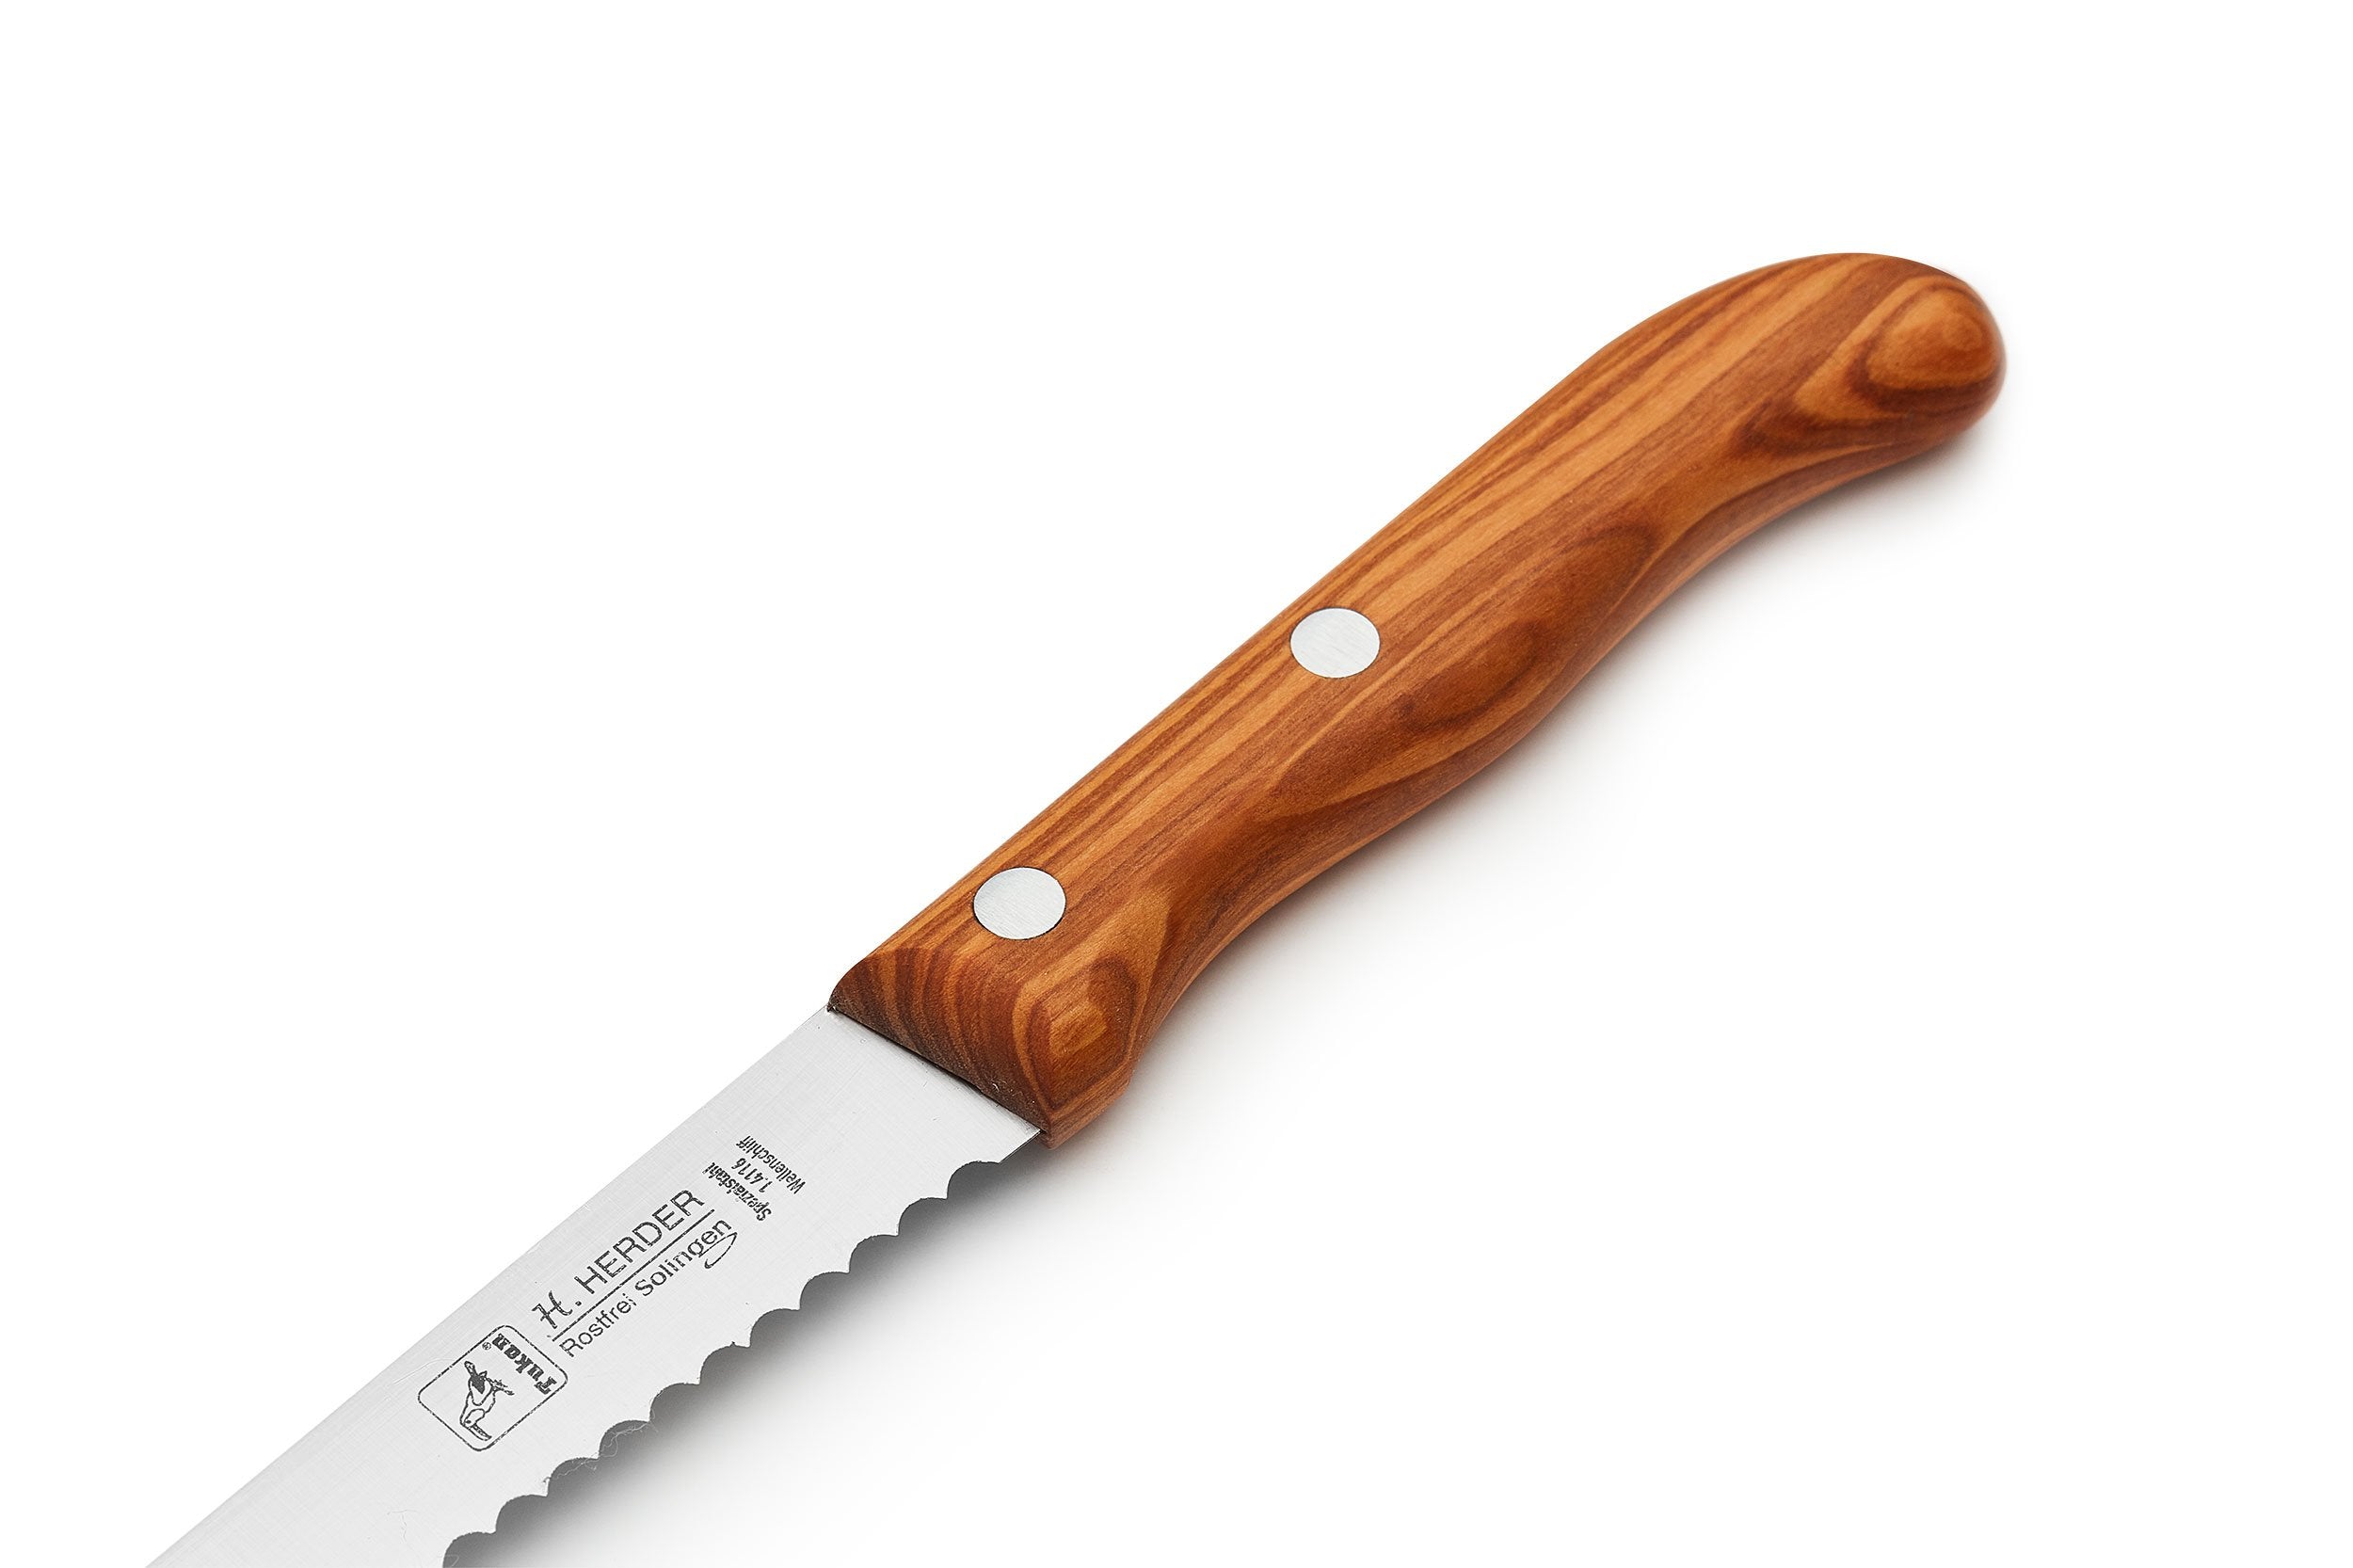 Household knife olive wood handle 10 cm shaft